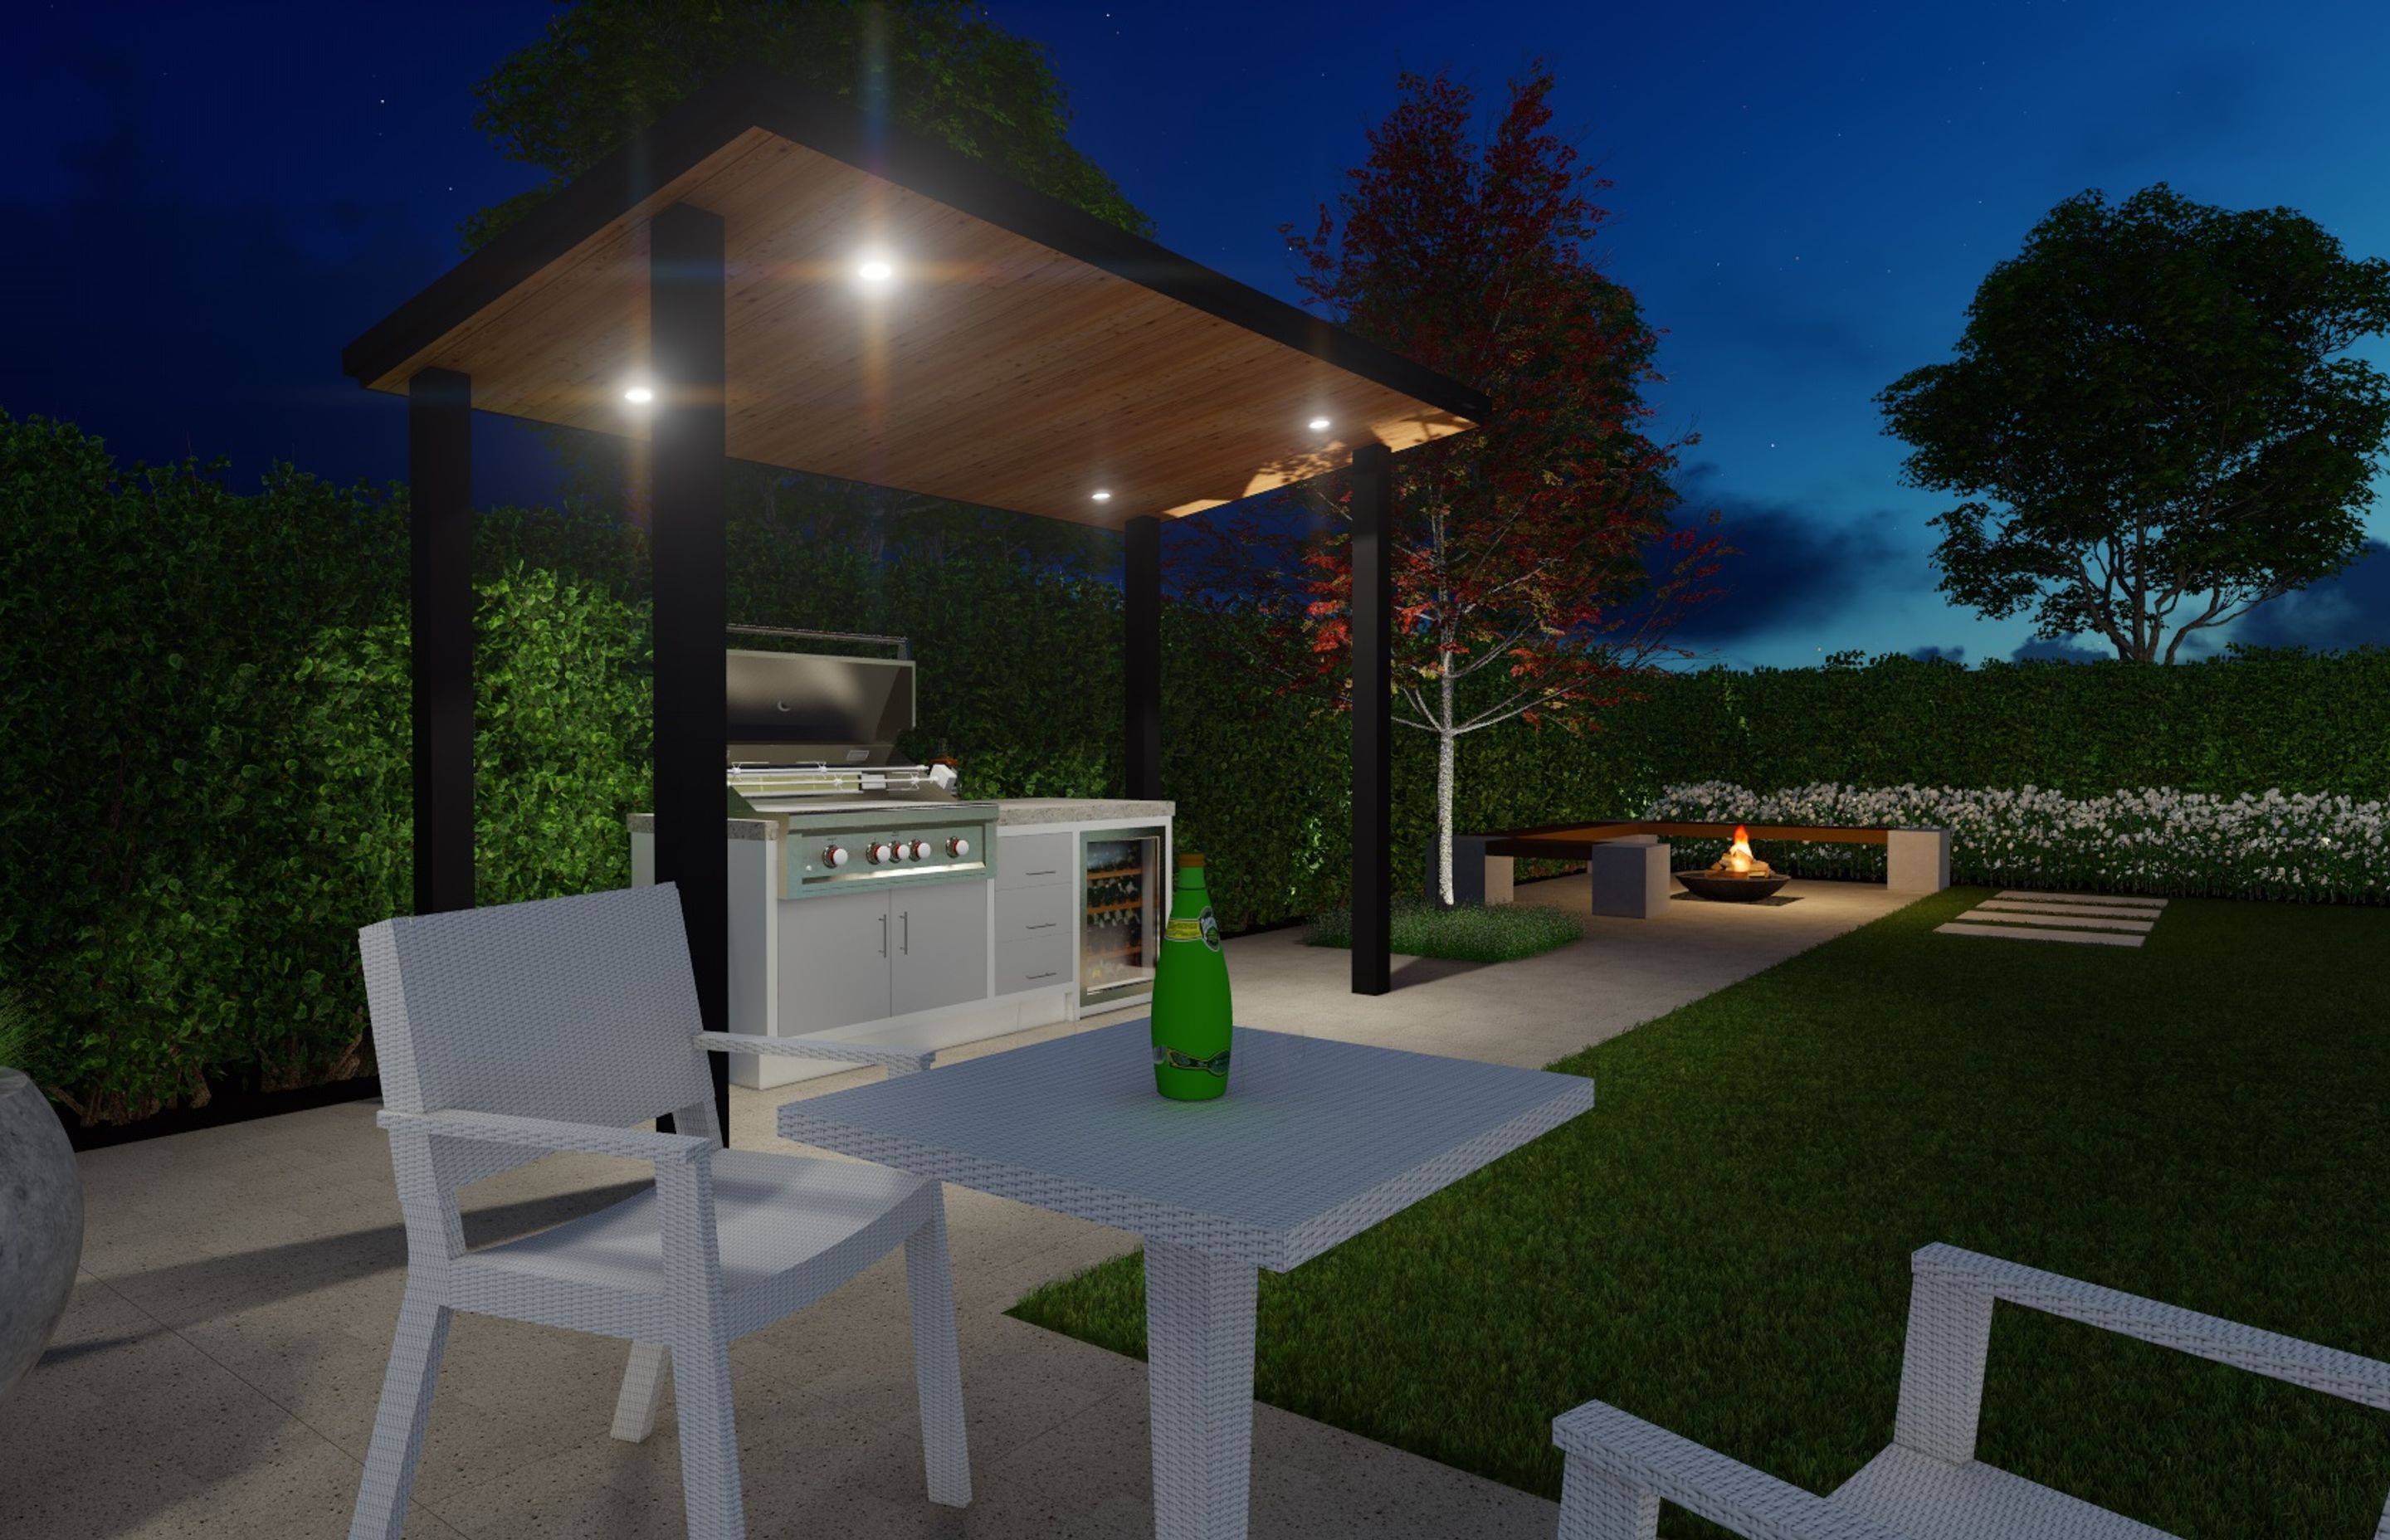 3D Renders: Anthony Scott | Backyard garden design ideas